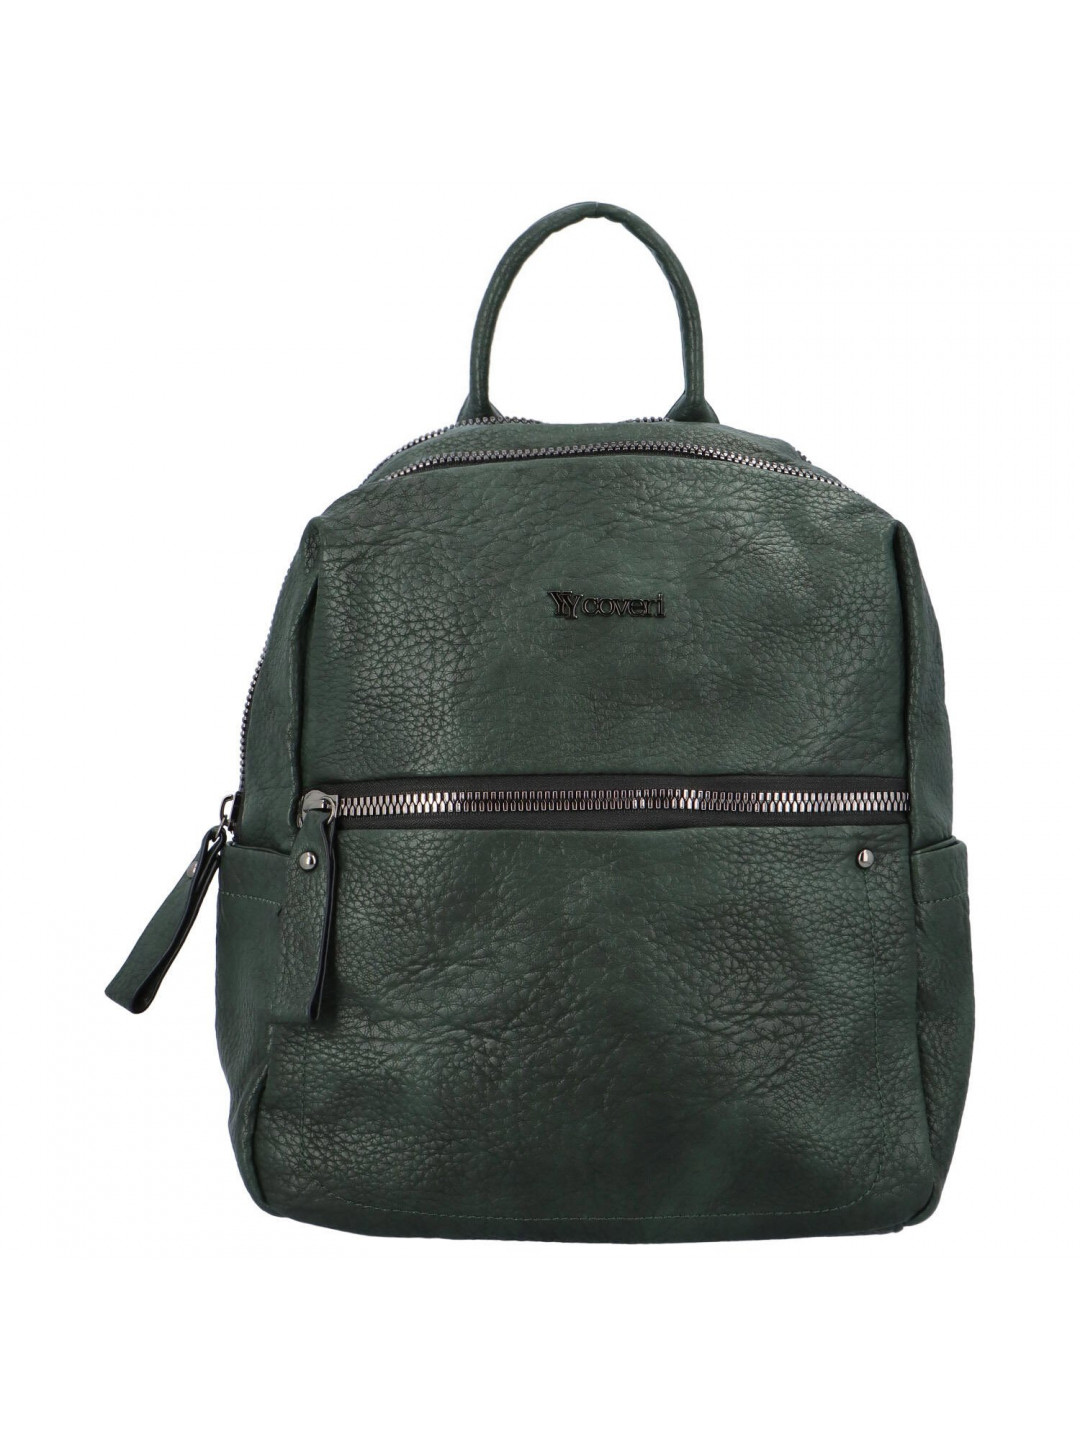 Prostorný dámský koženkový batoh Knut zelená